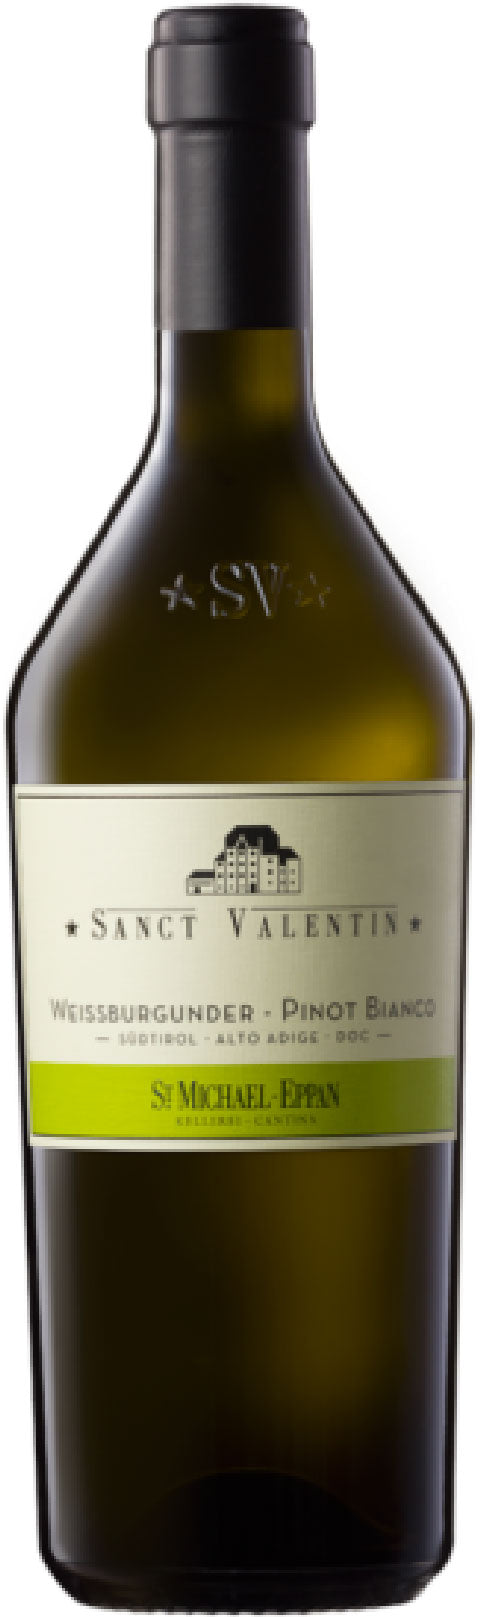 St. Michael-Eppan Pinot Bianco Sanct Valentin 2017